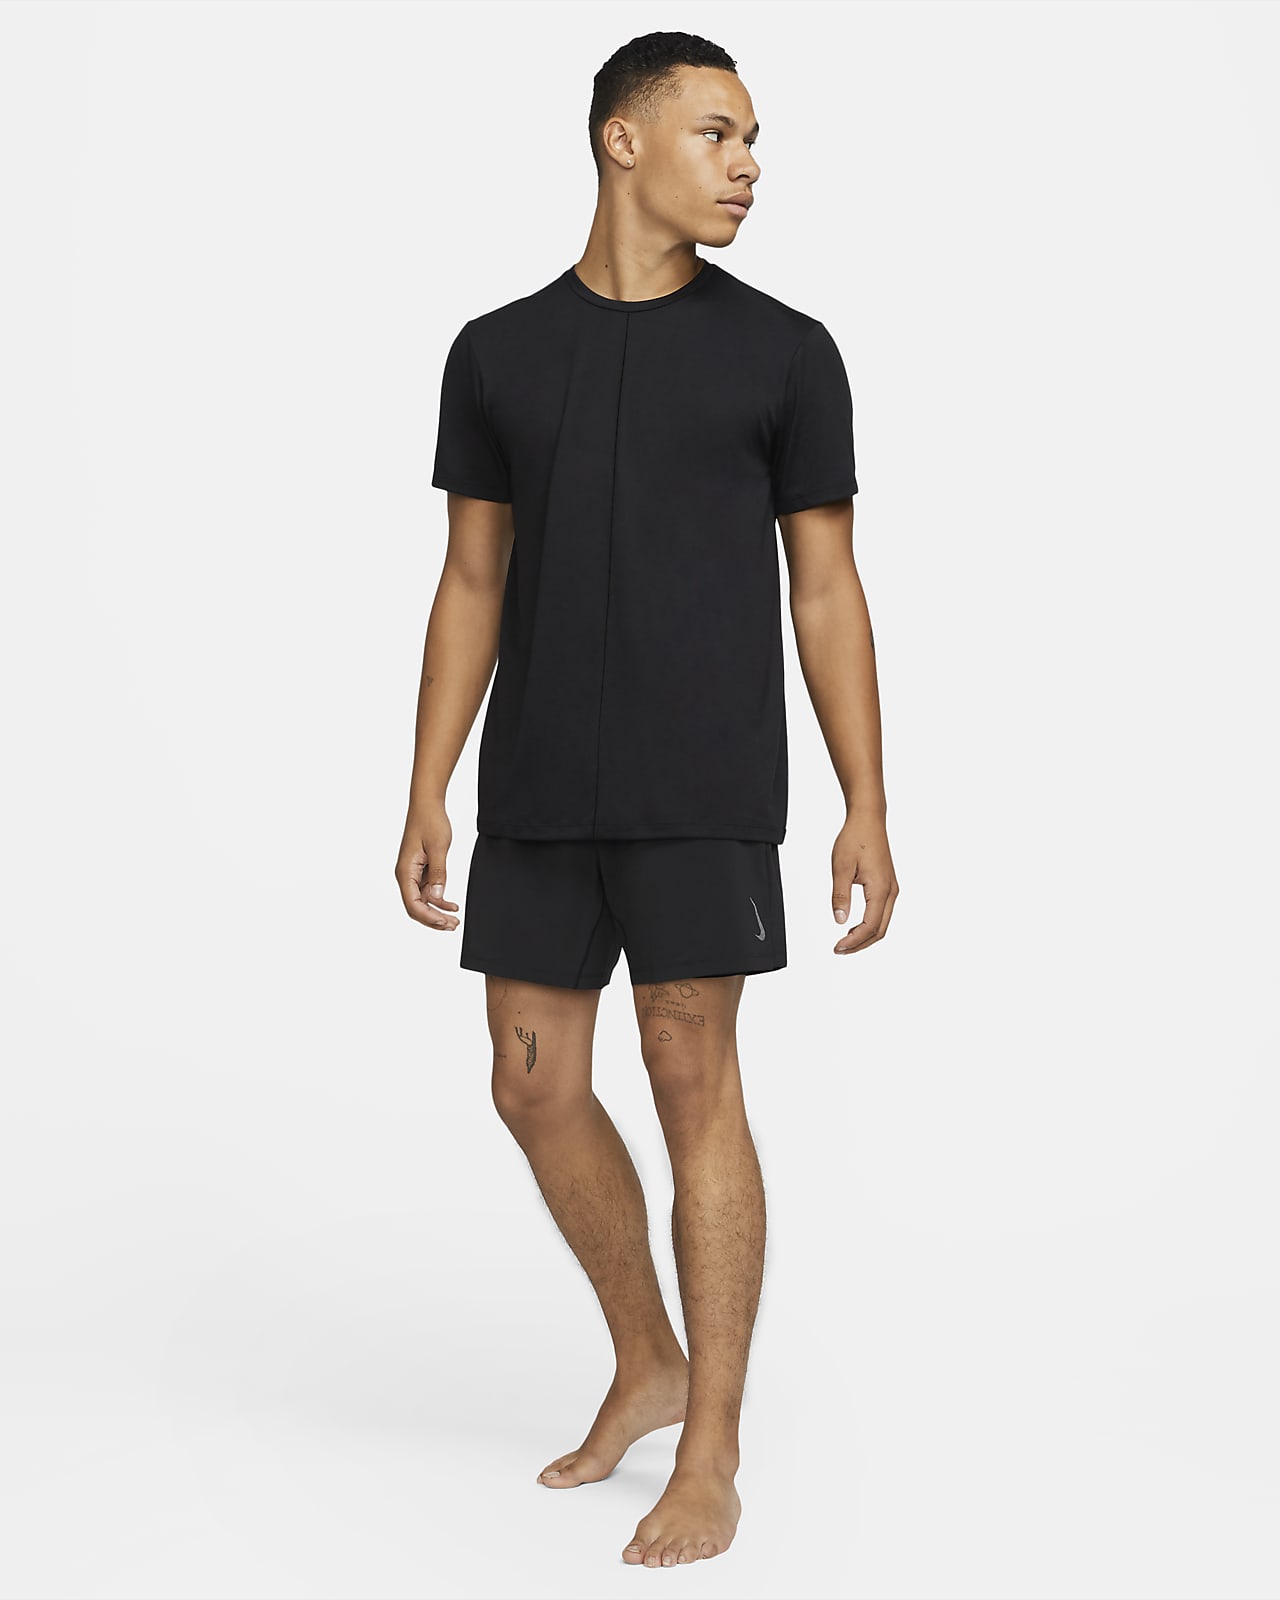 Nike Yoga luxe shorts in bronze